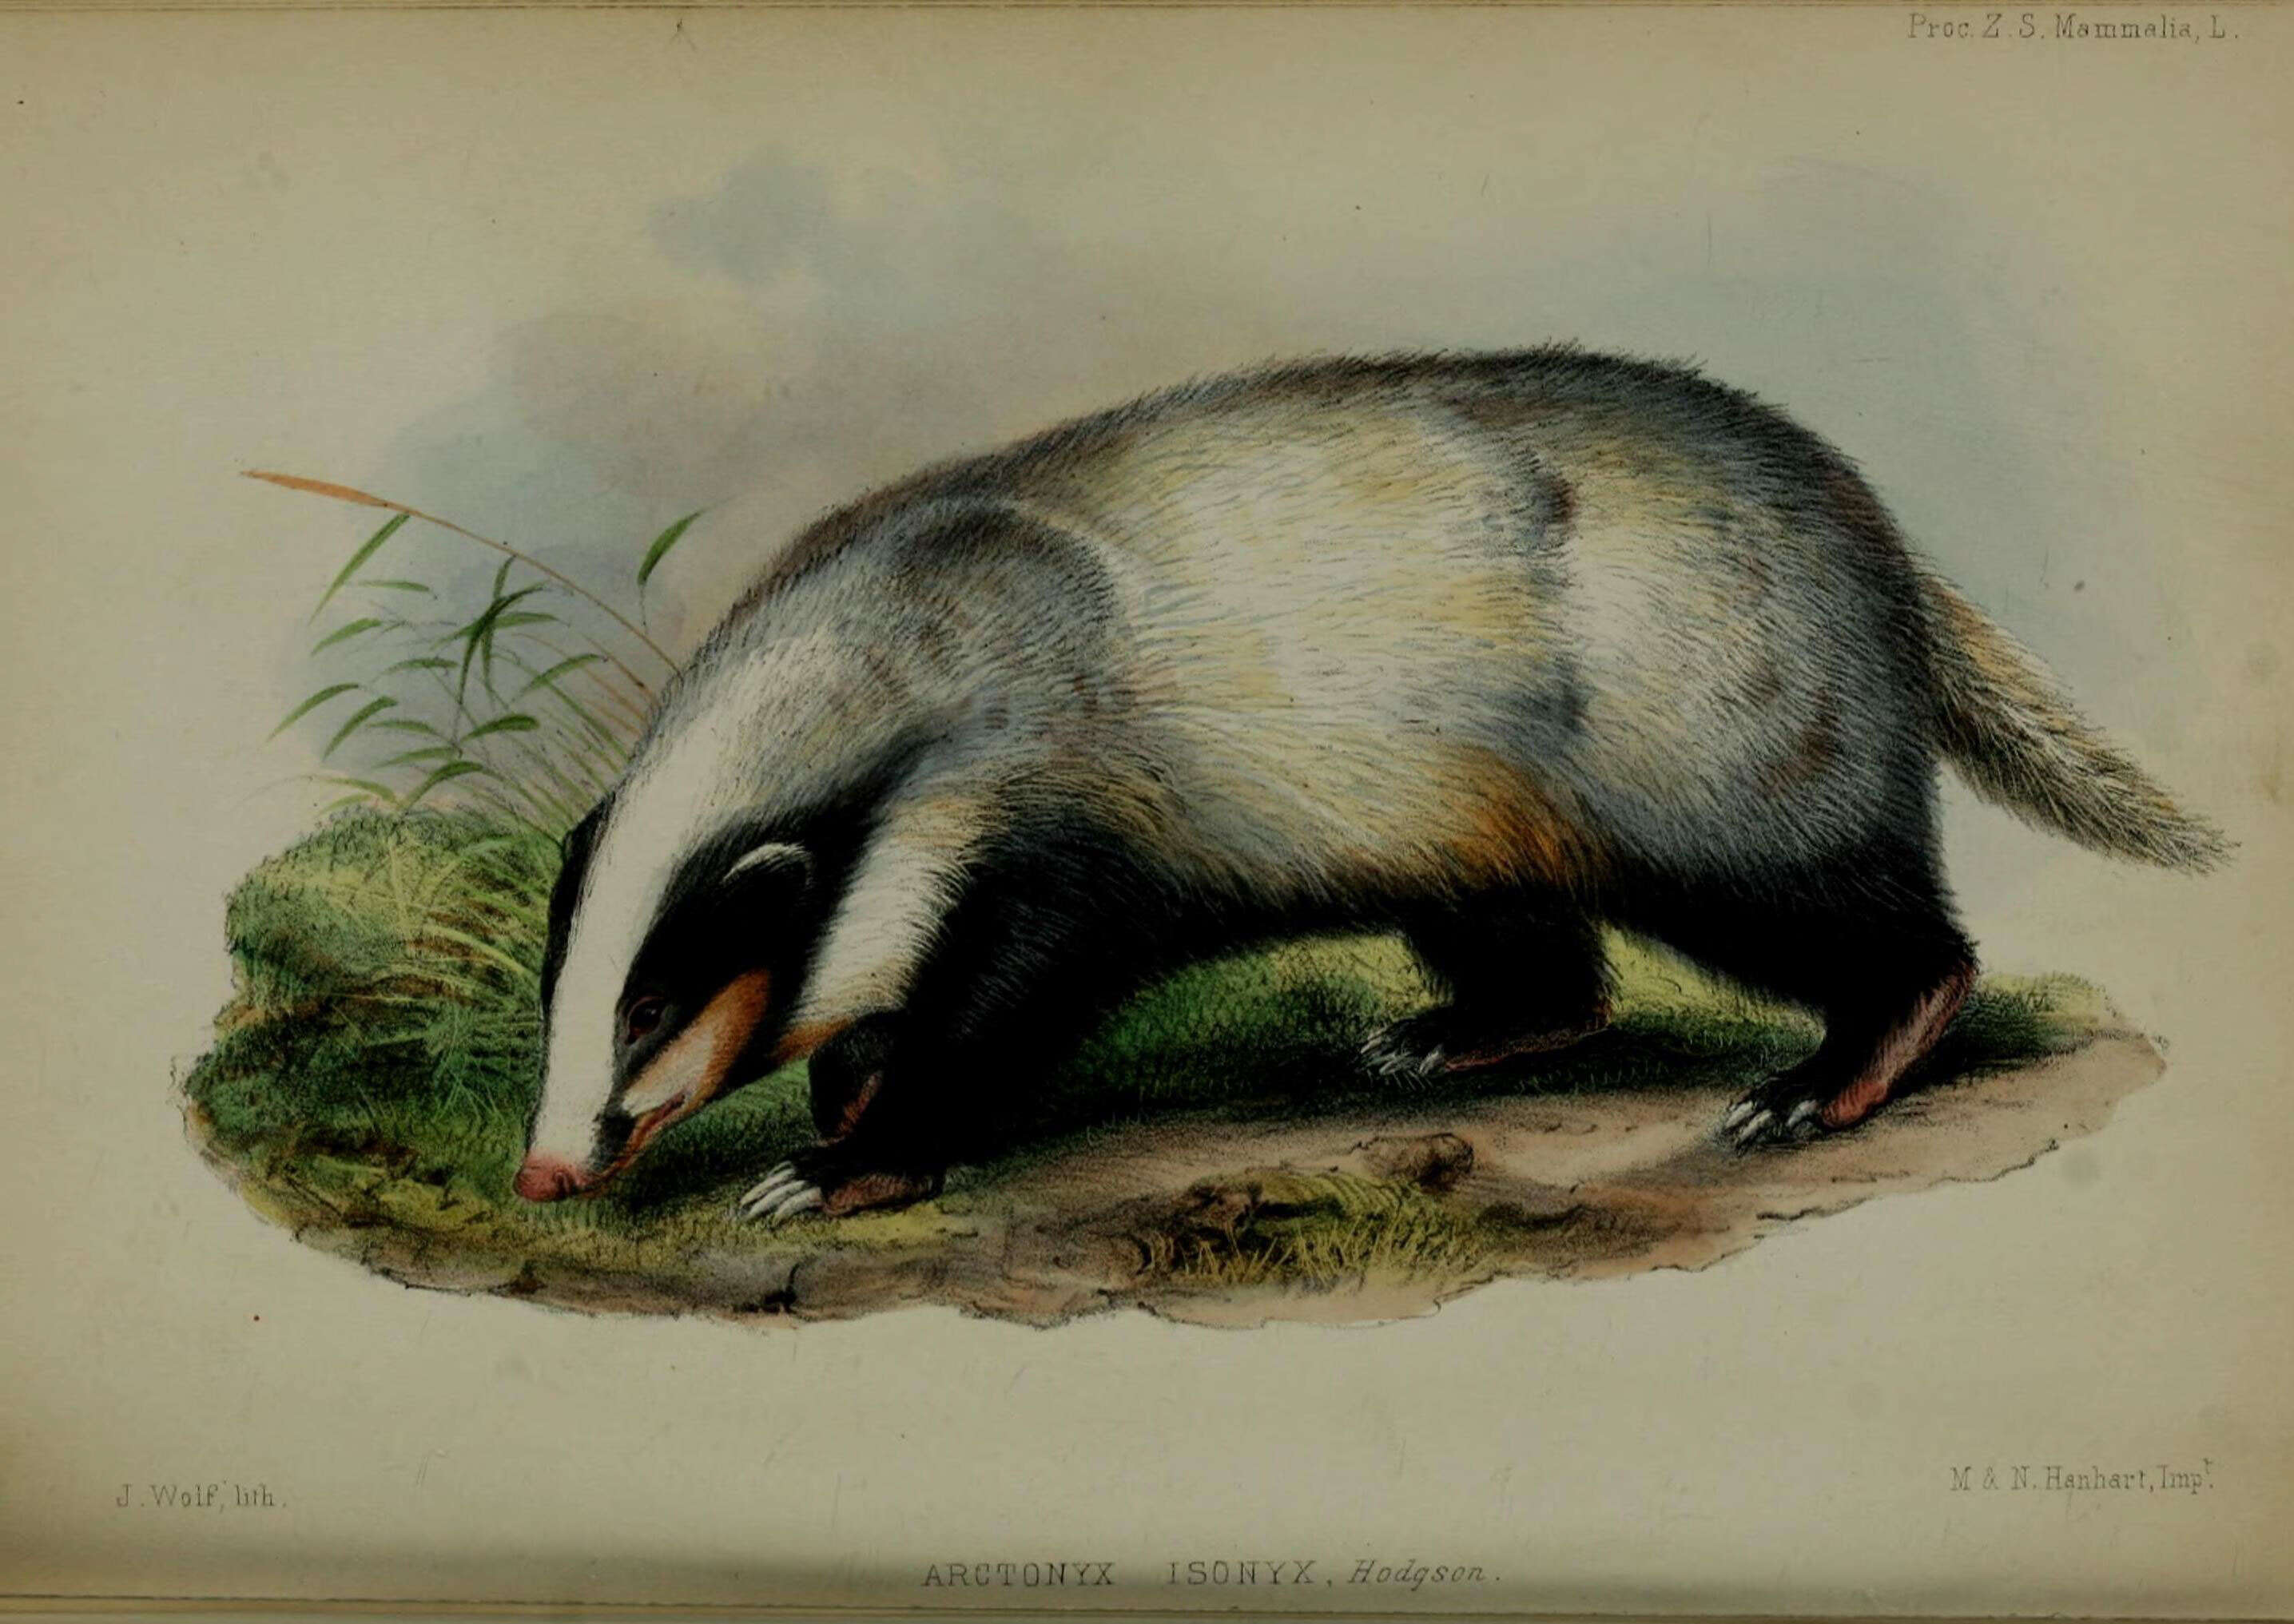 Image of Arctonyx F. G. Cuvier 1825